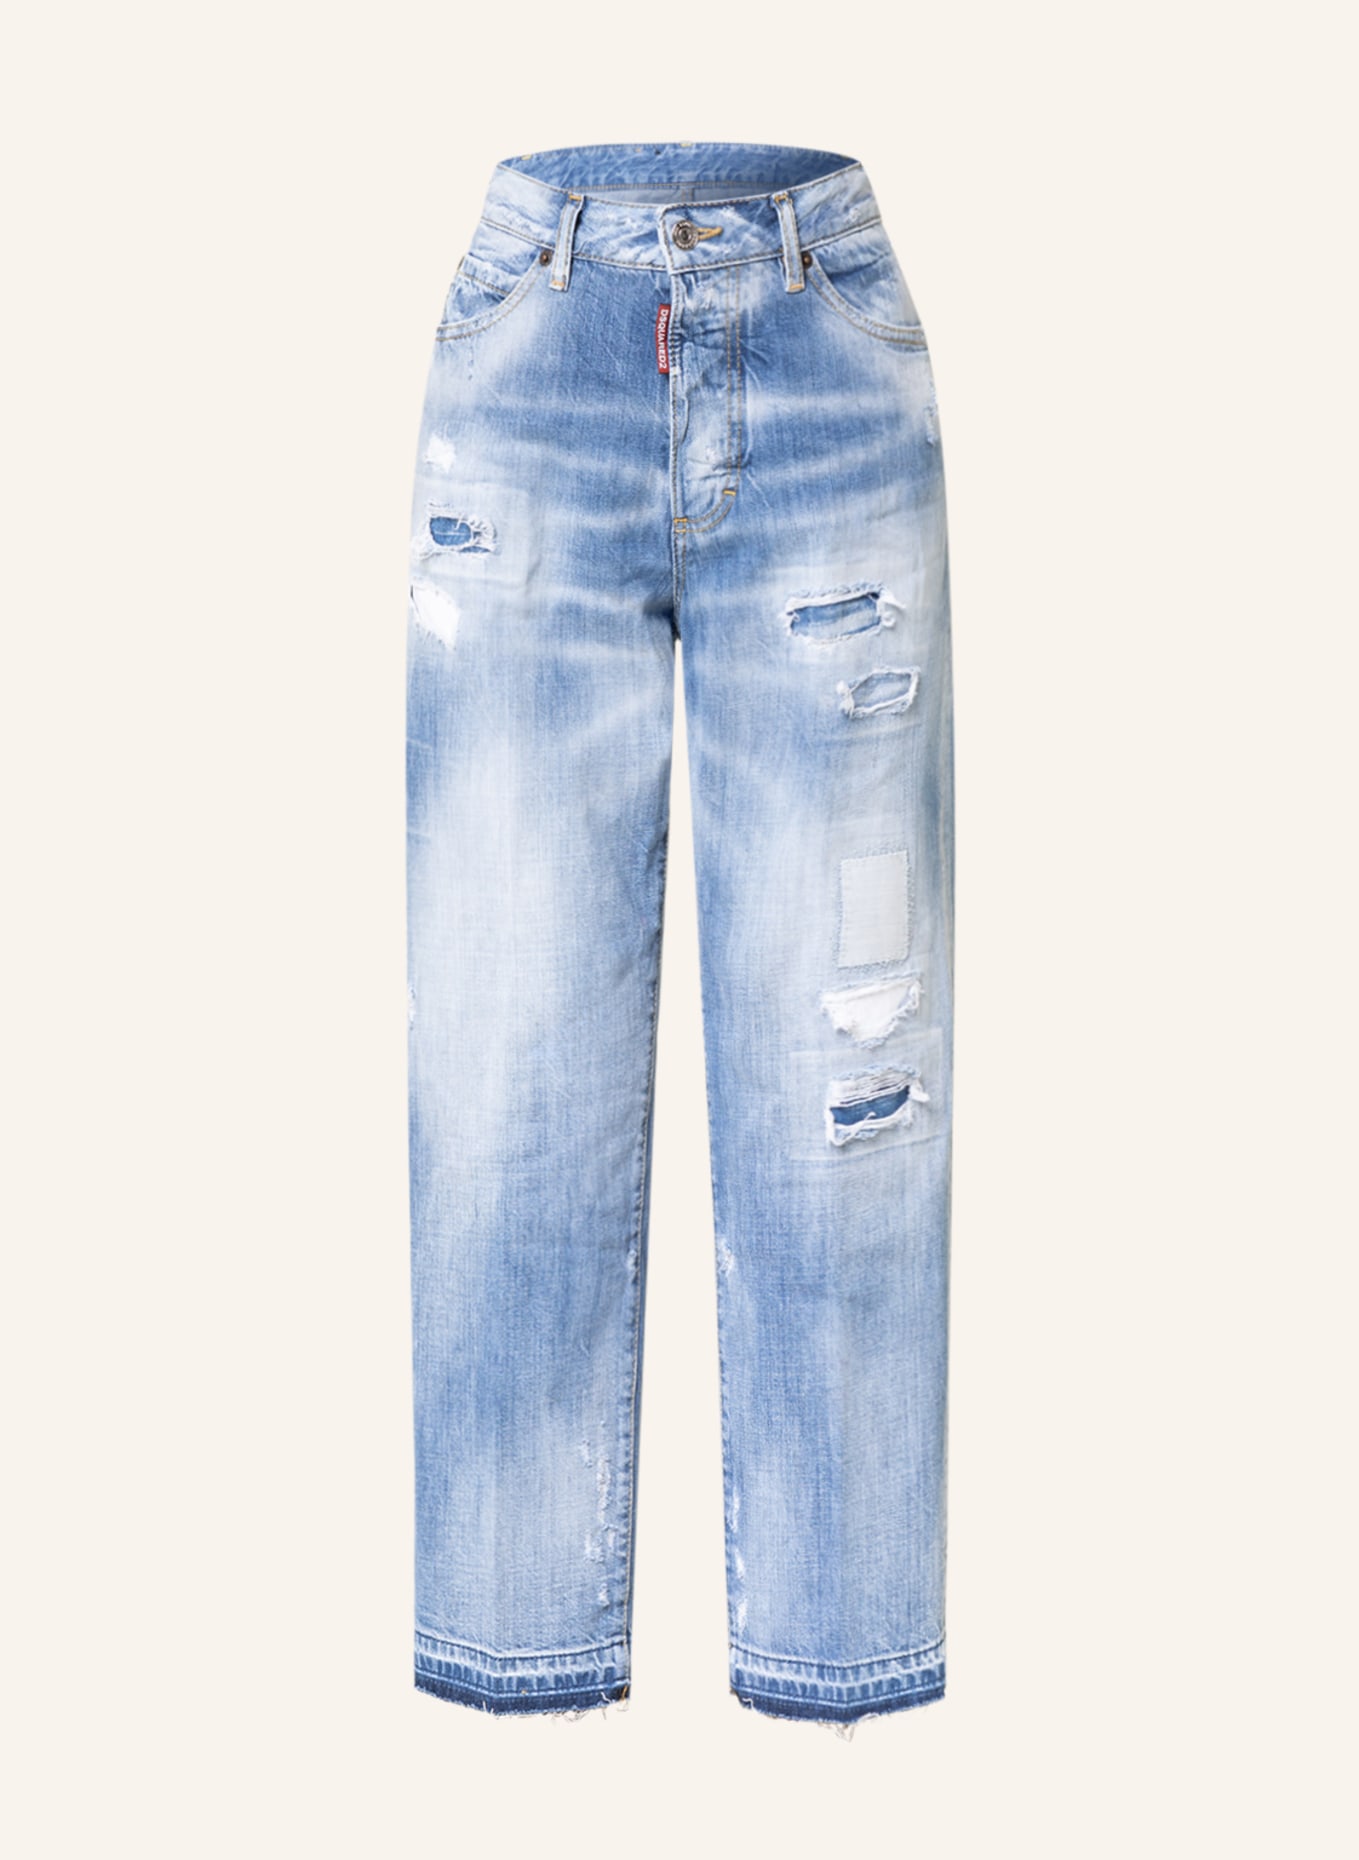 DSQUARED2 Destroyed Jeans BOSTON JEAN, Farbe: 470 BLUE NAVY (Bild 1)